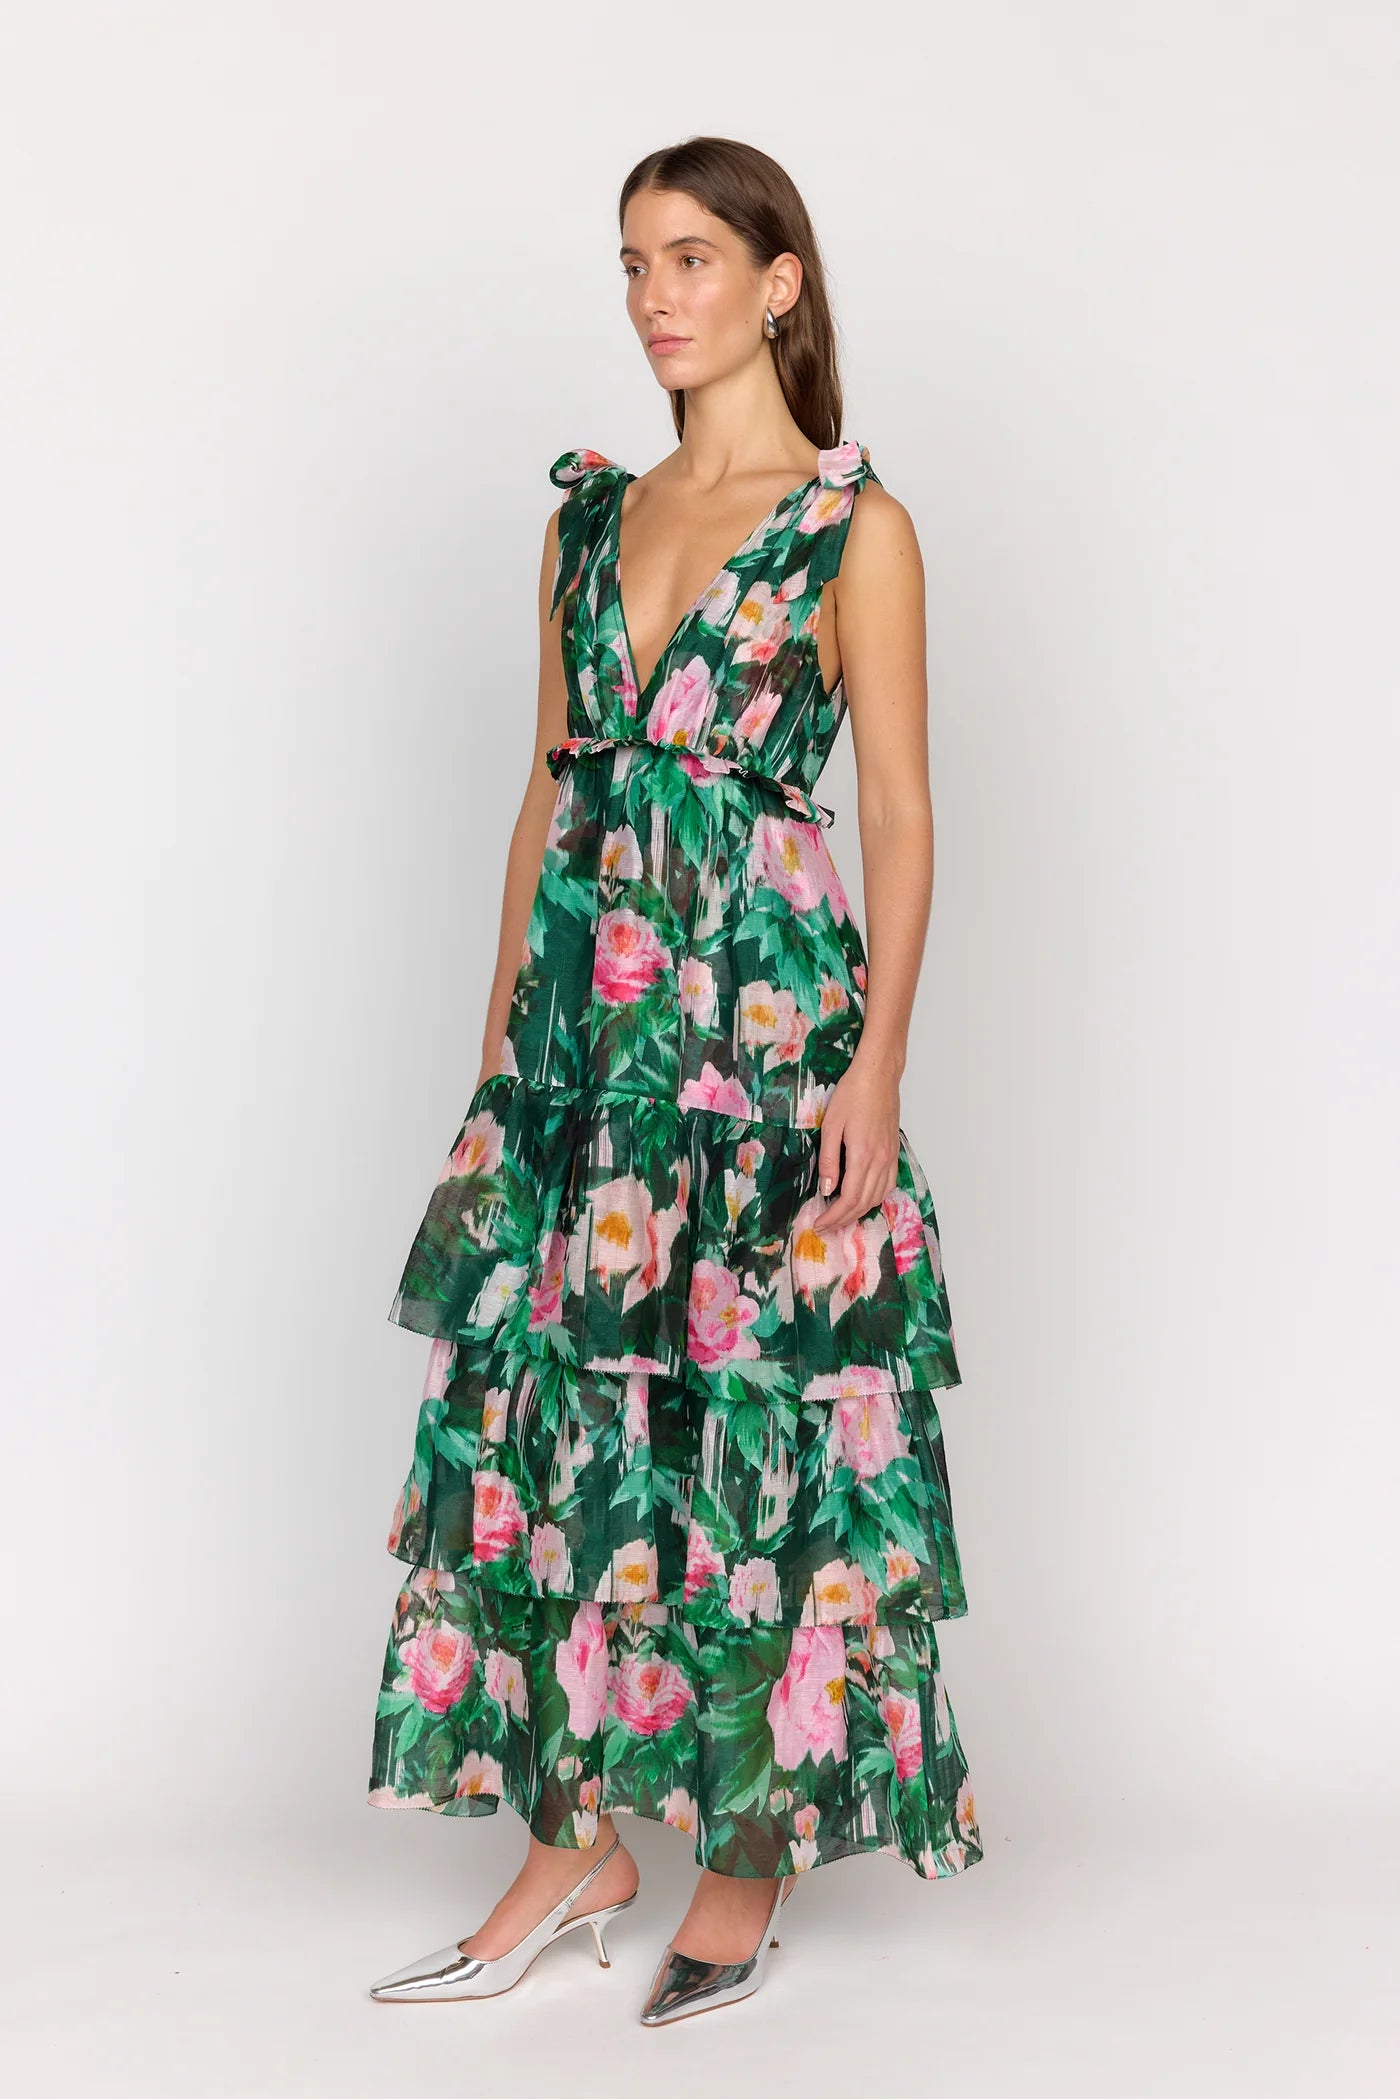 Christy Lynn Alexa Dress- Camellia Garden